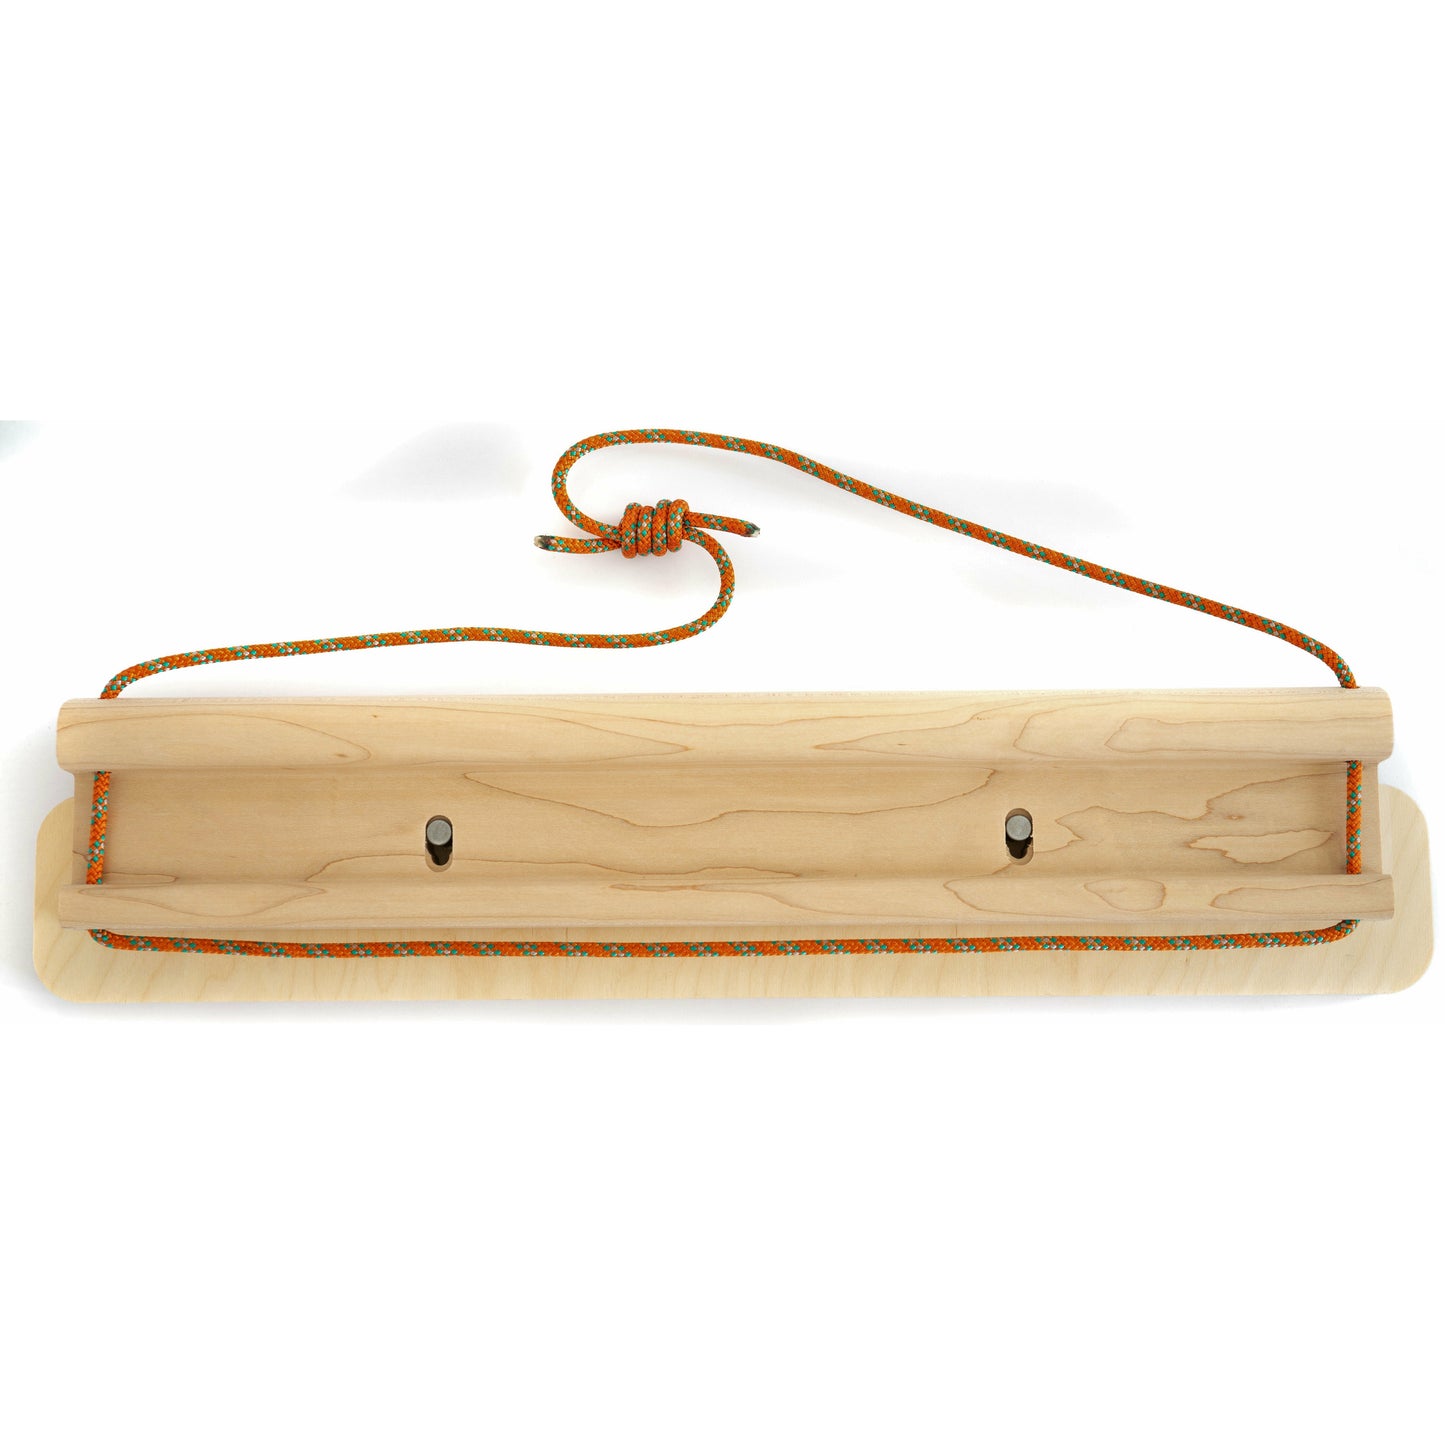 Wood Hangboard - The Easy Board